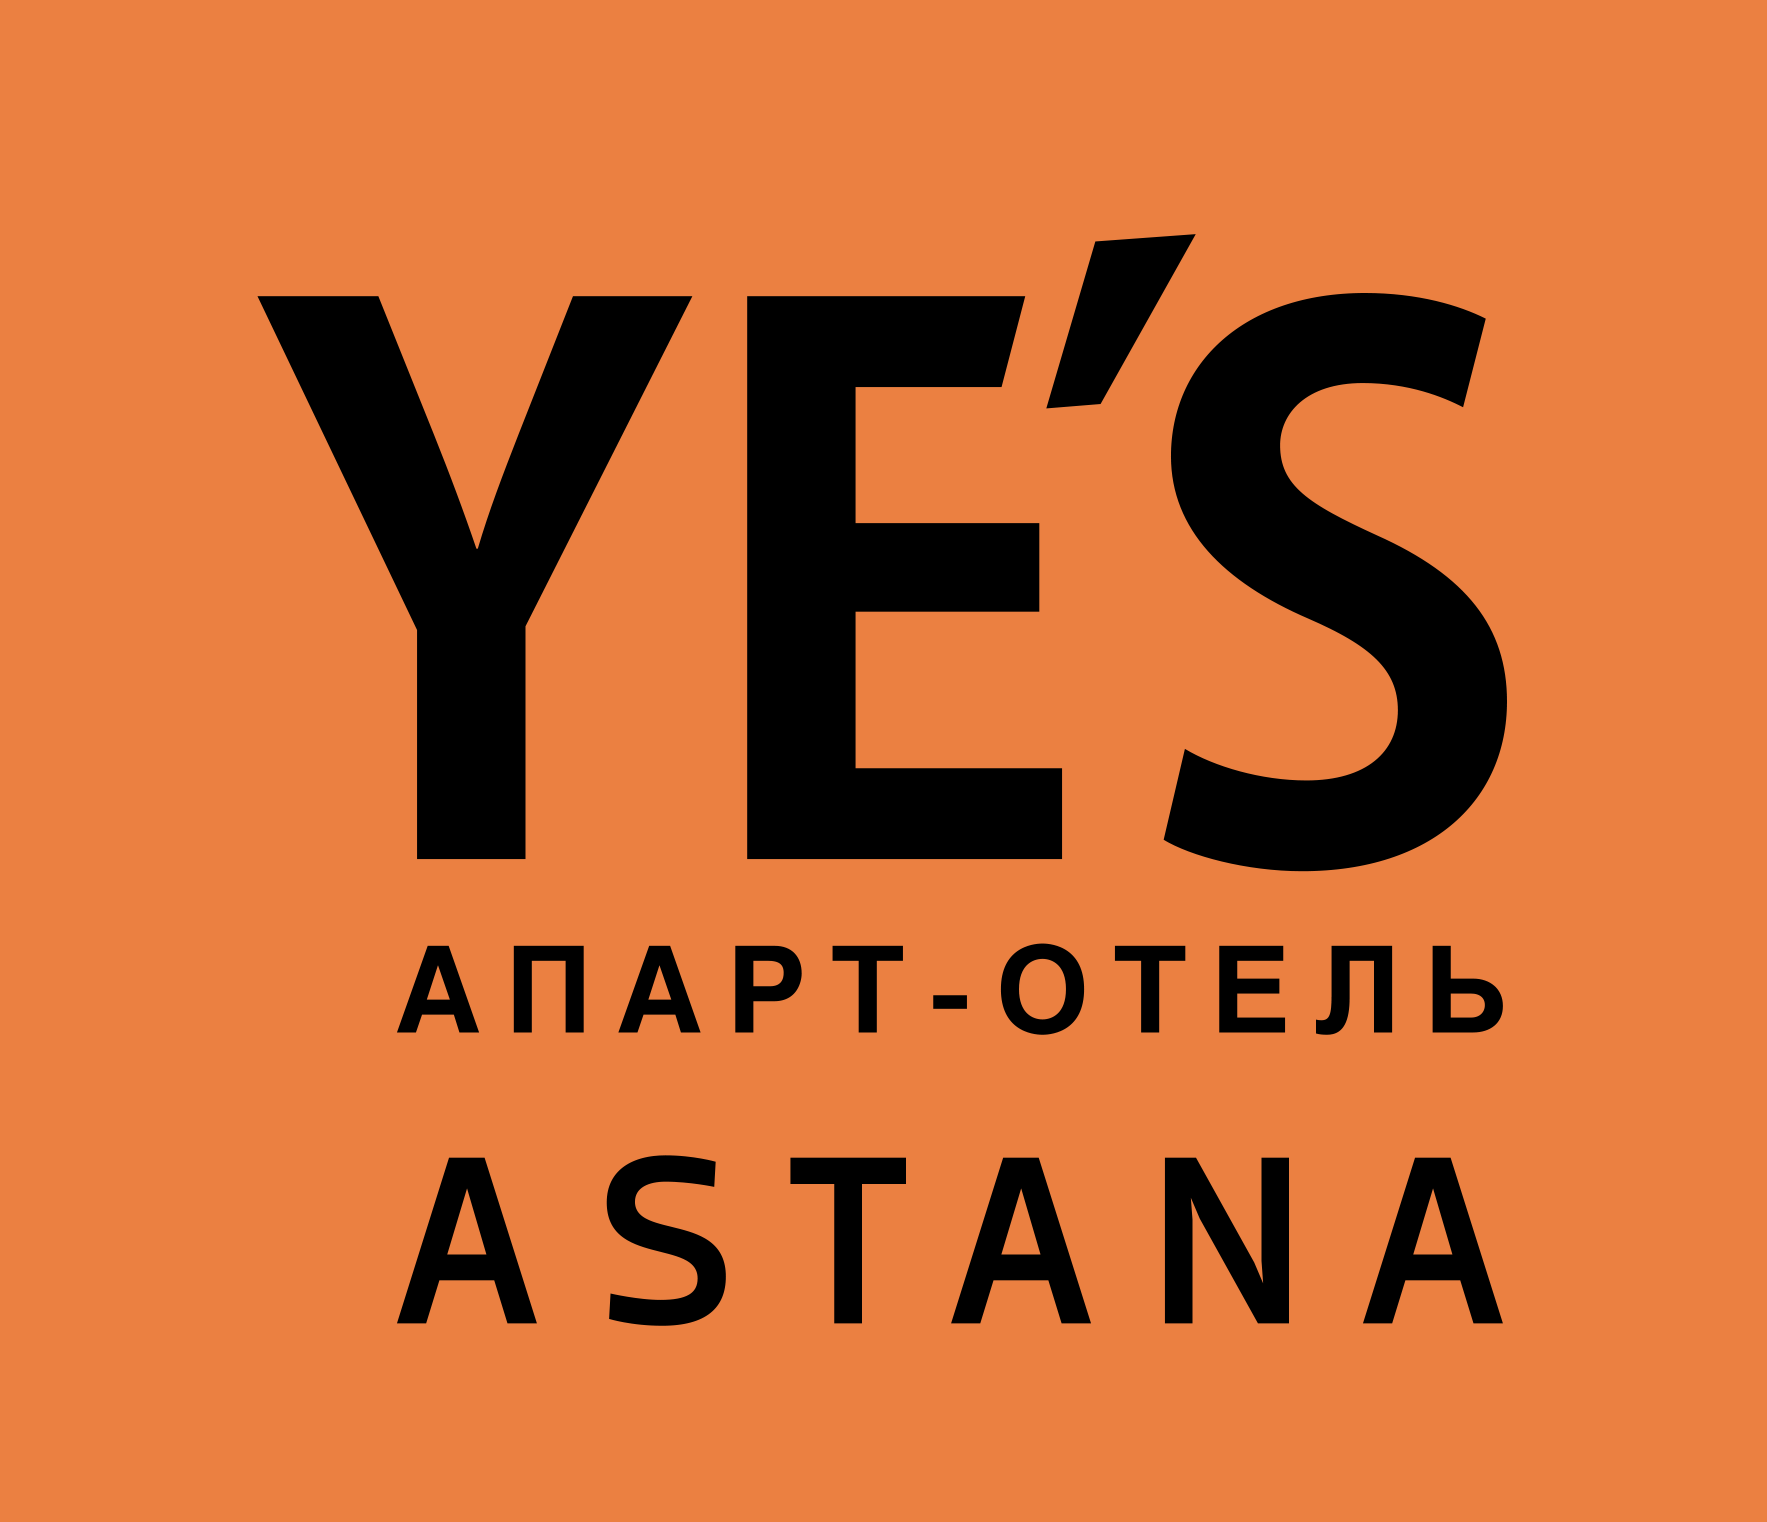 YE'S АПАРТ-отель ASTANA